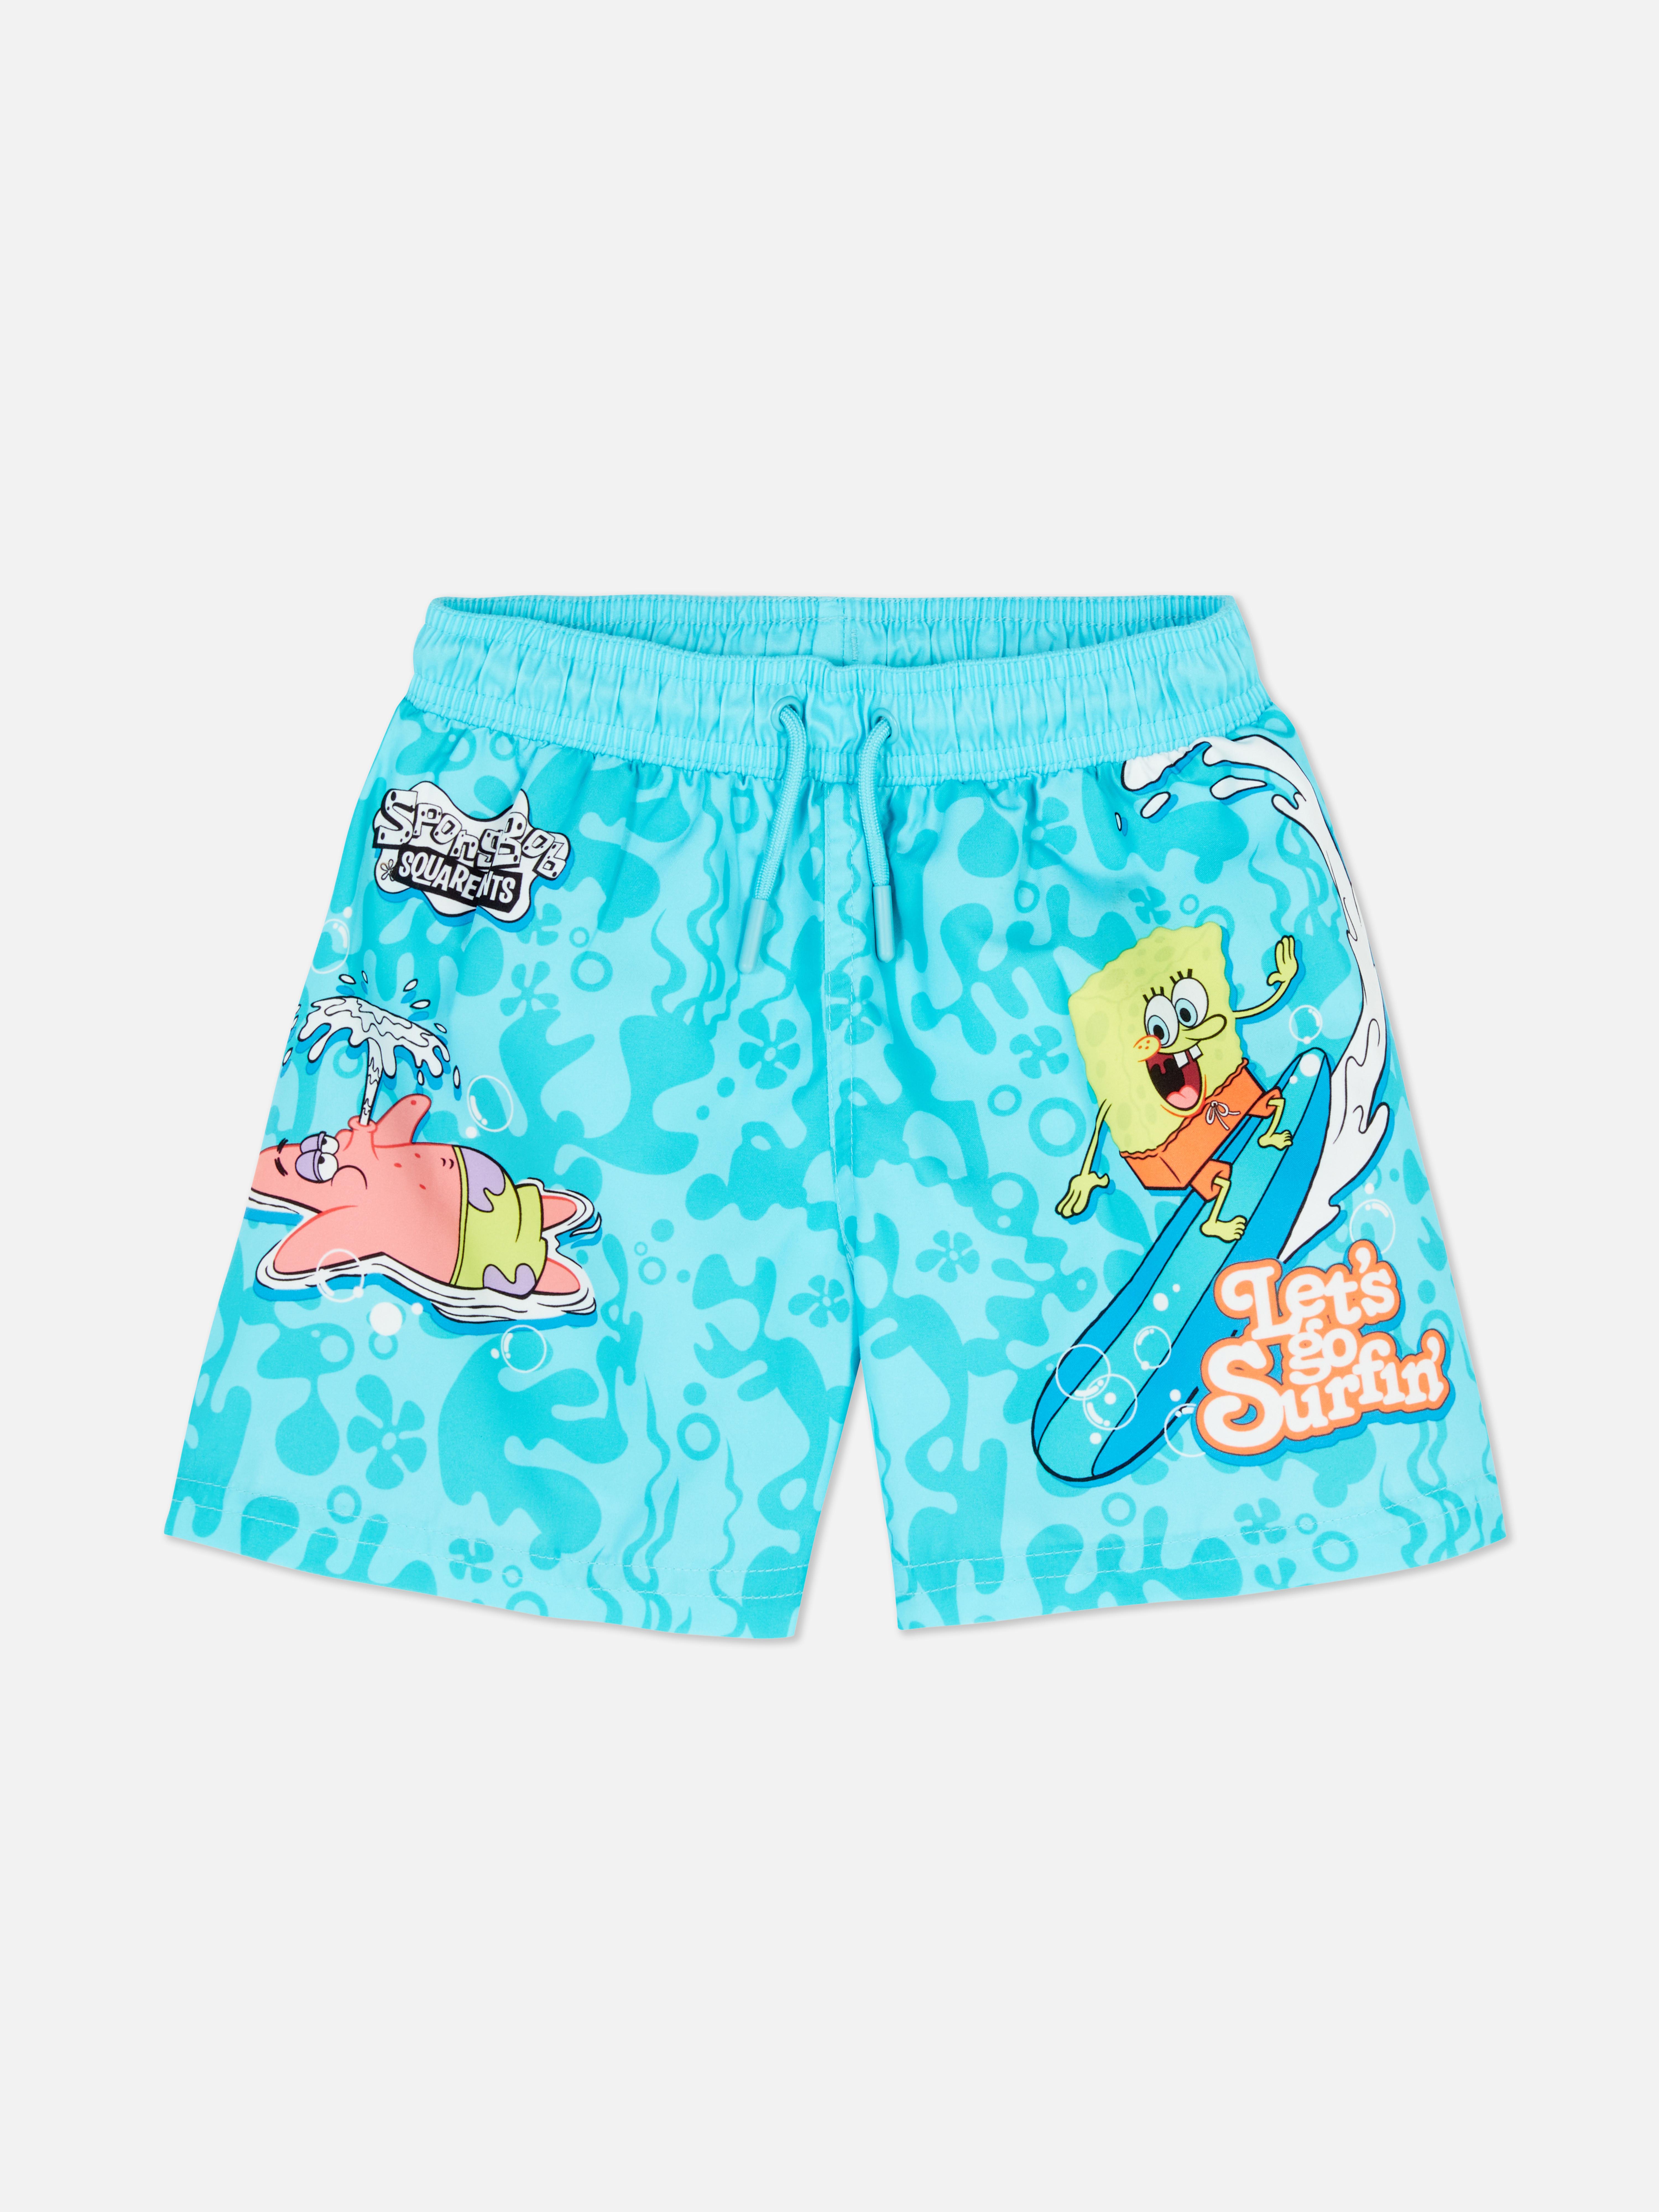 SpongeBob SquarePants Board Shorts